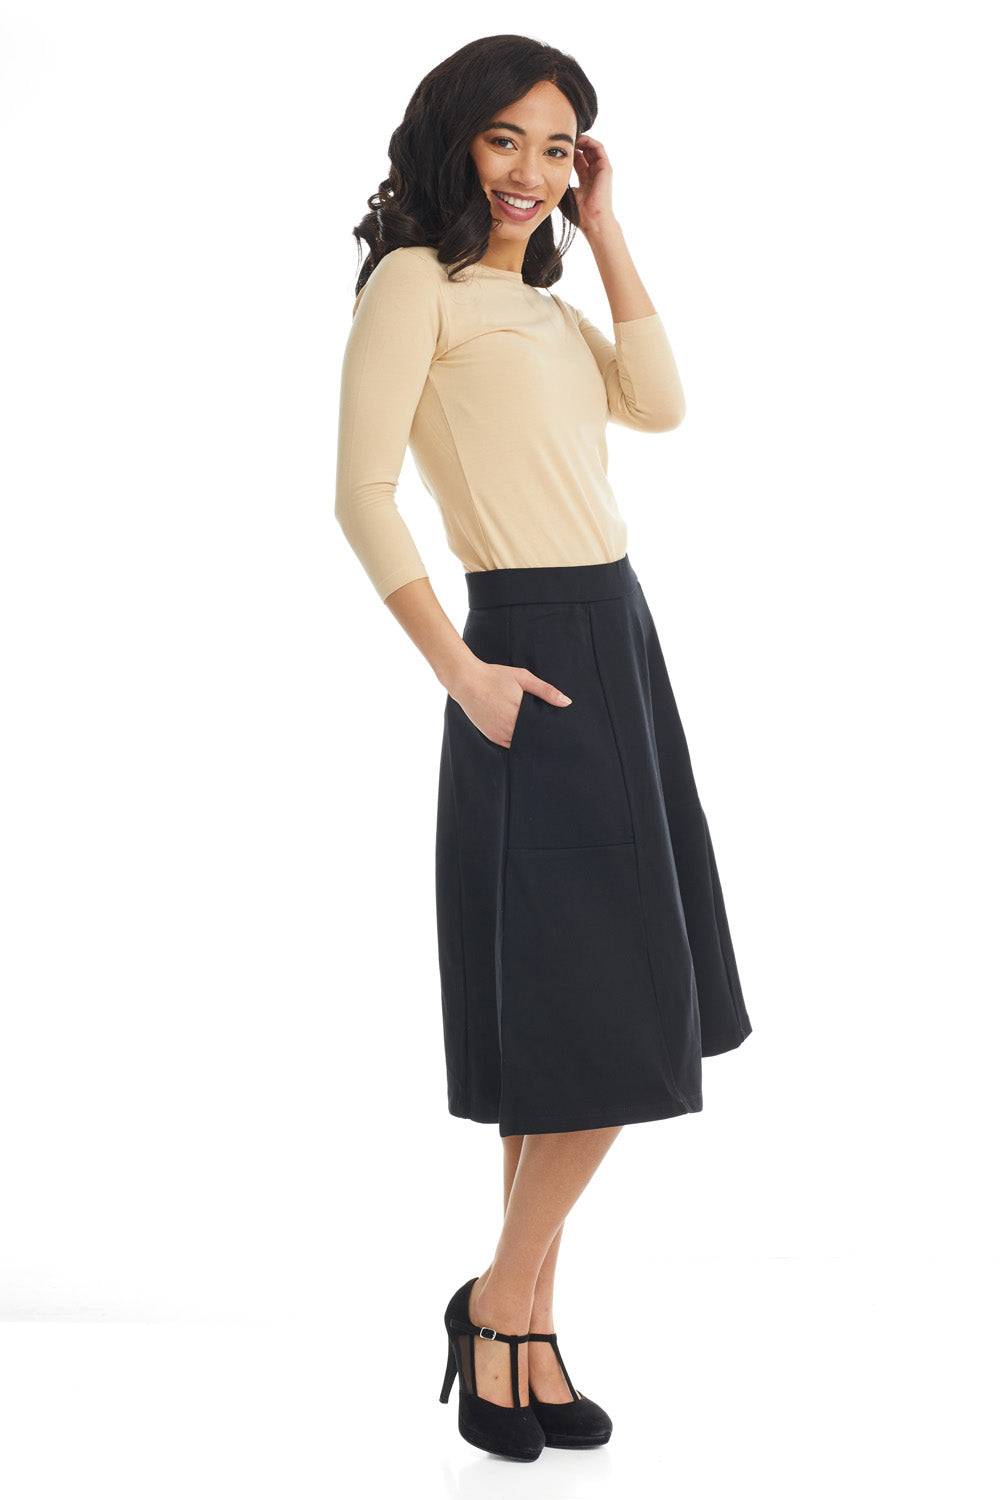 black fancy modest A-Line skater skirt with pockets for women